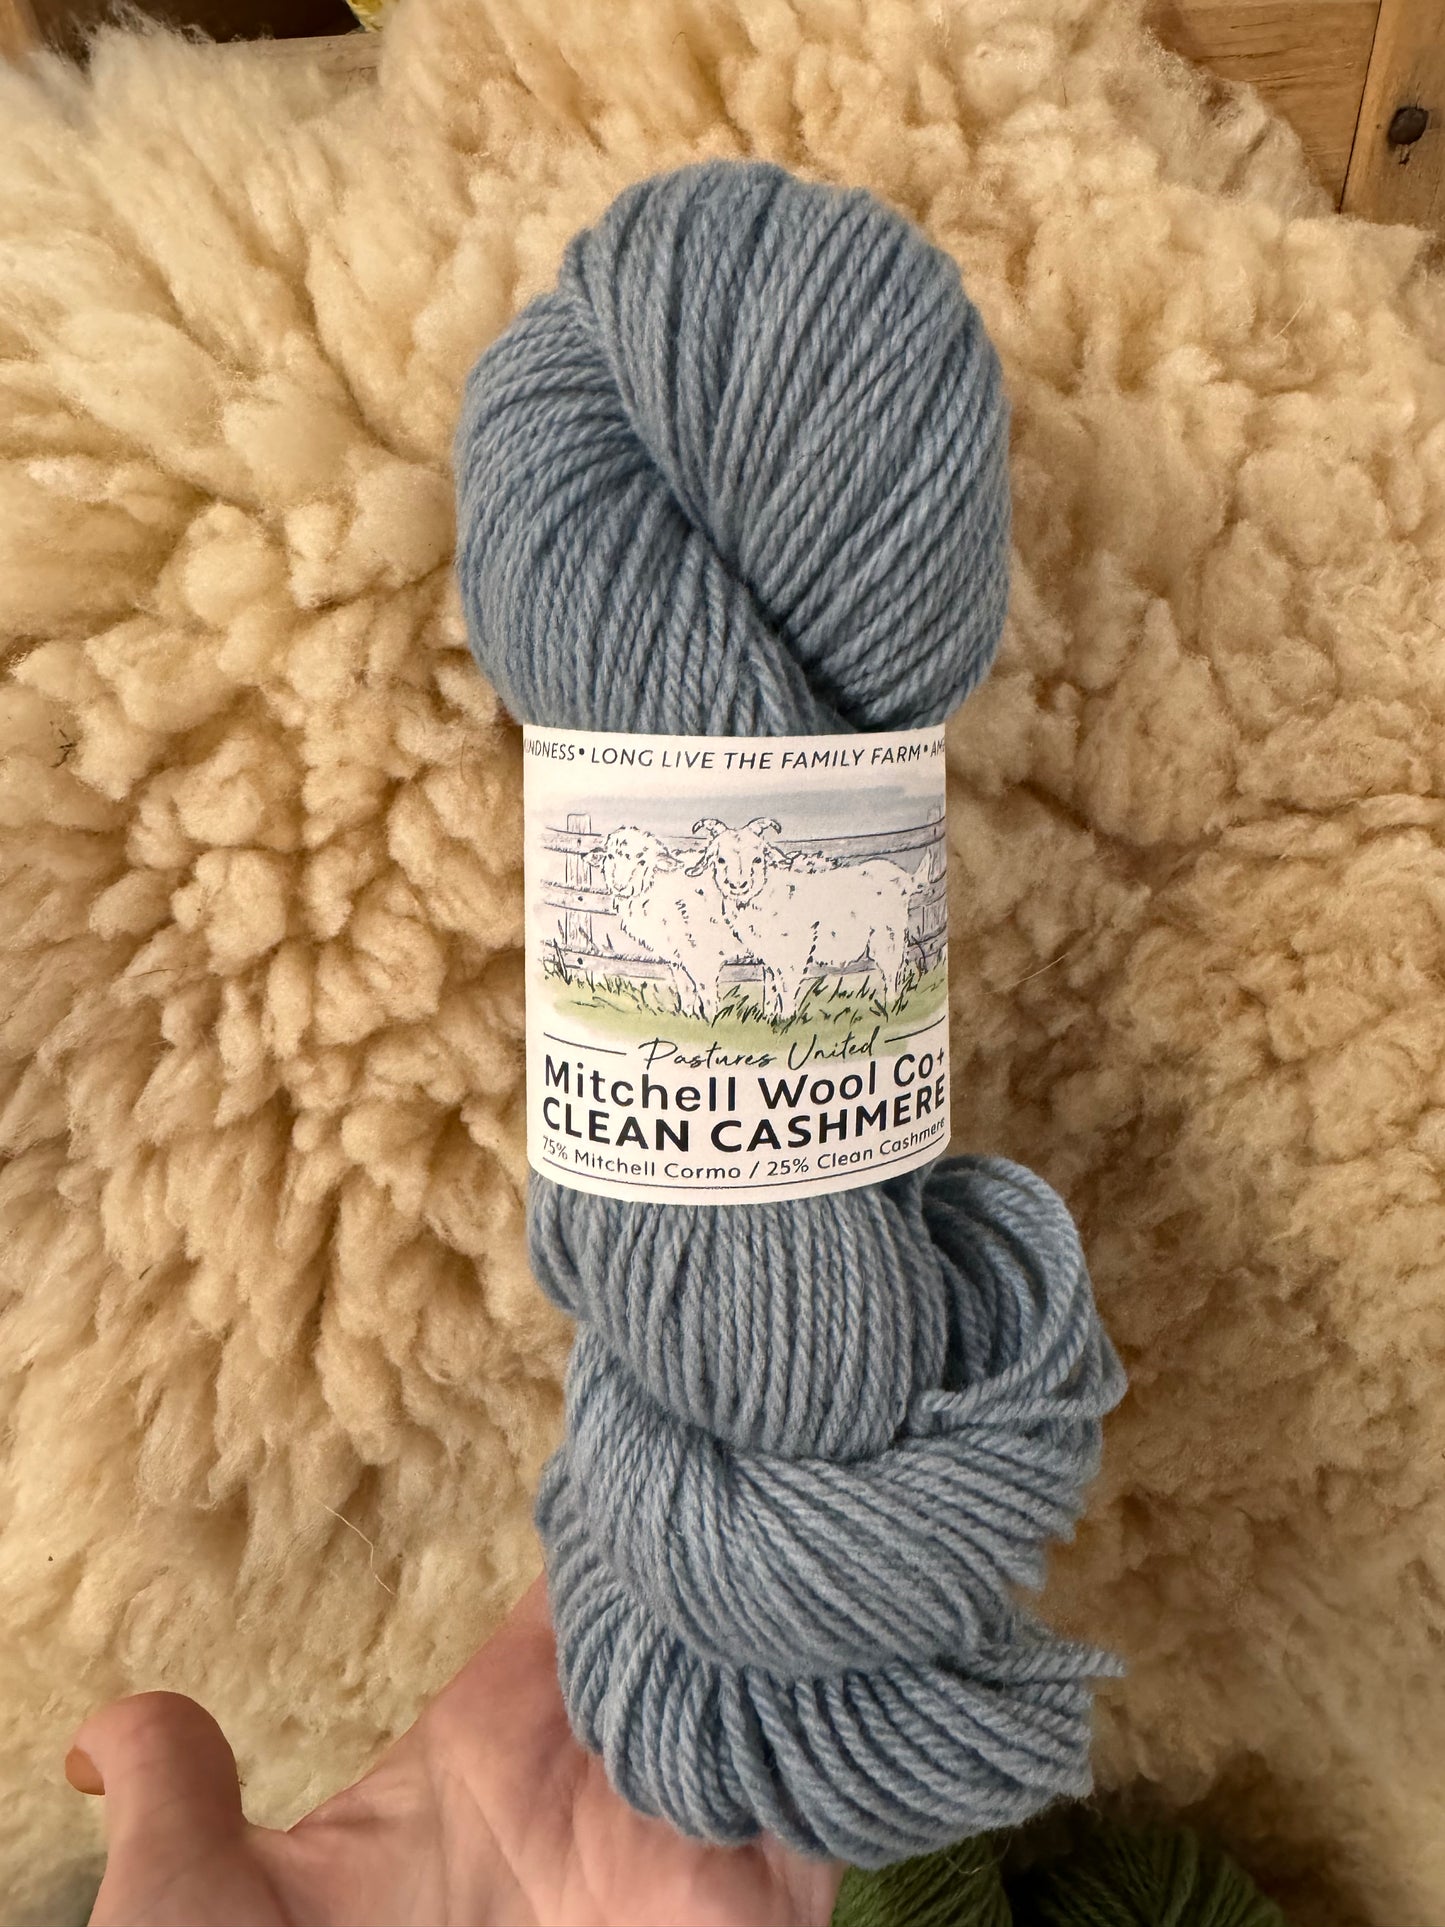 CORMO/CASHMERE DK yarn